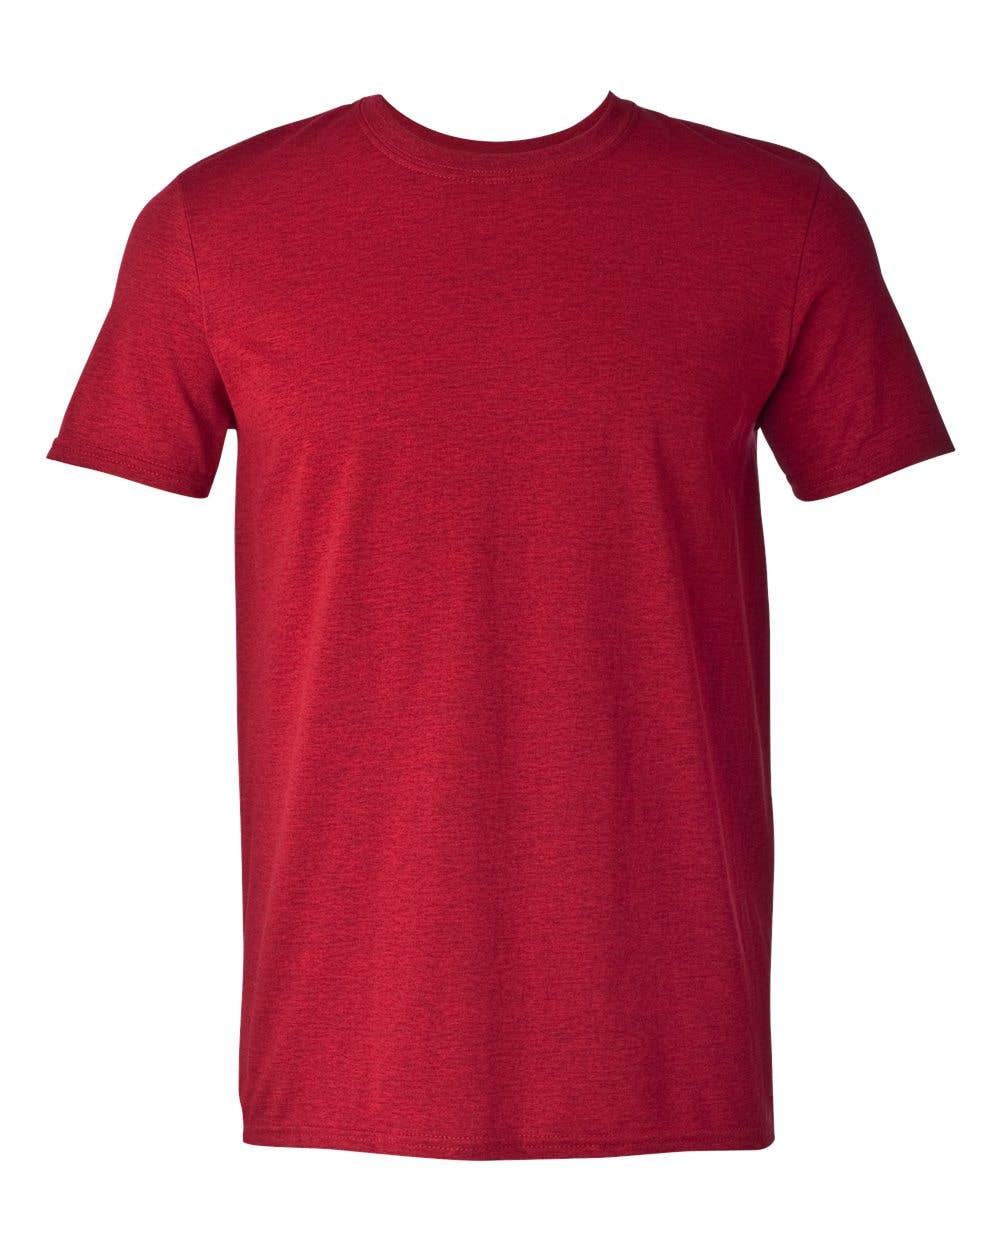 Gildan Soft Adult Shirt, Blank Unisex T-shirt: 2XL / White